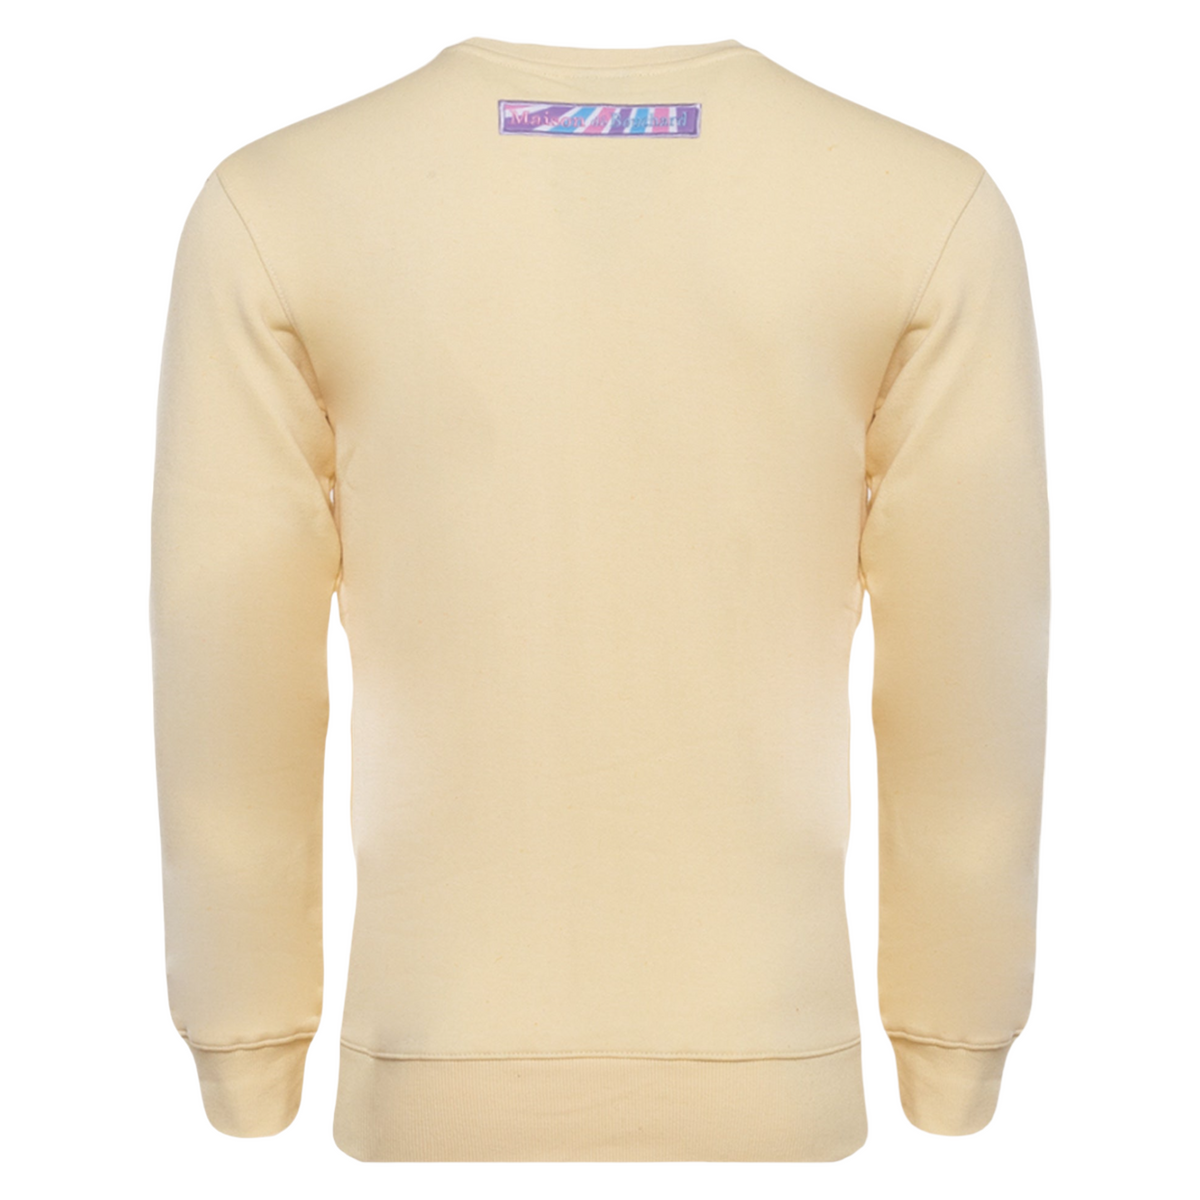 MDB Brand Men's "The M Brand" Swirl Crewneck Sweatshirt - Warm Color